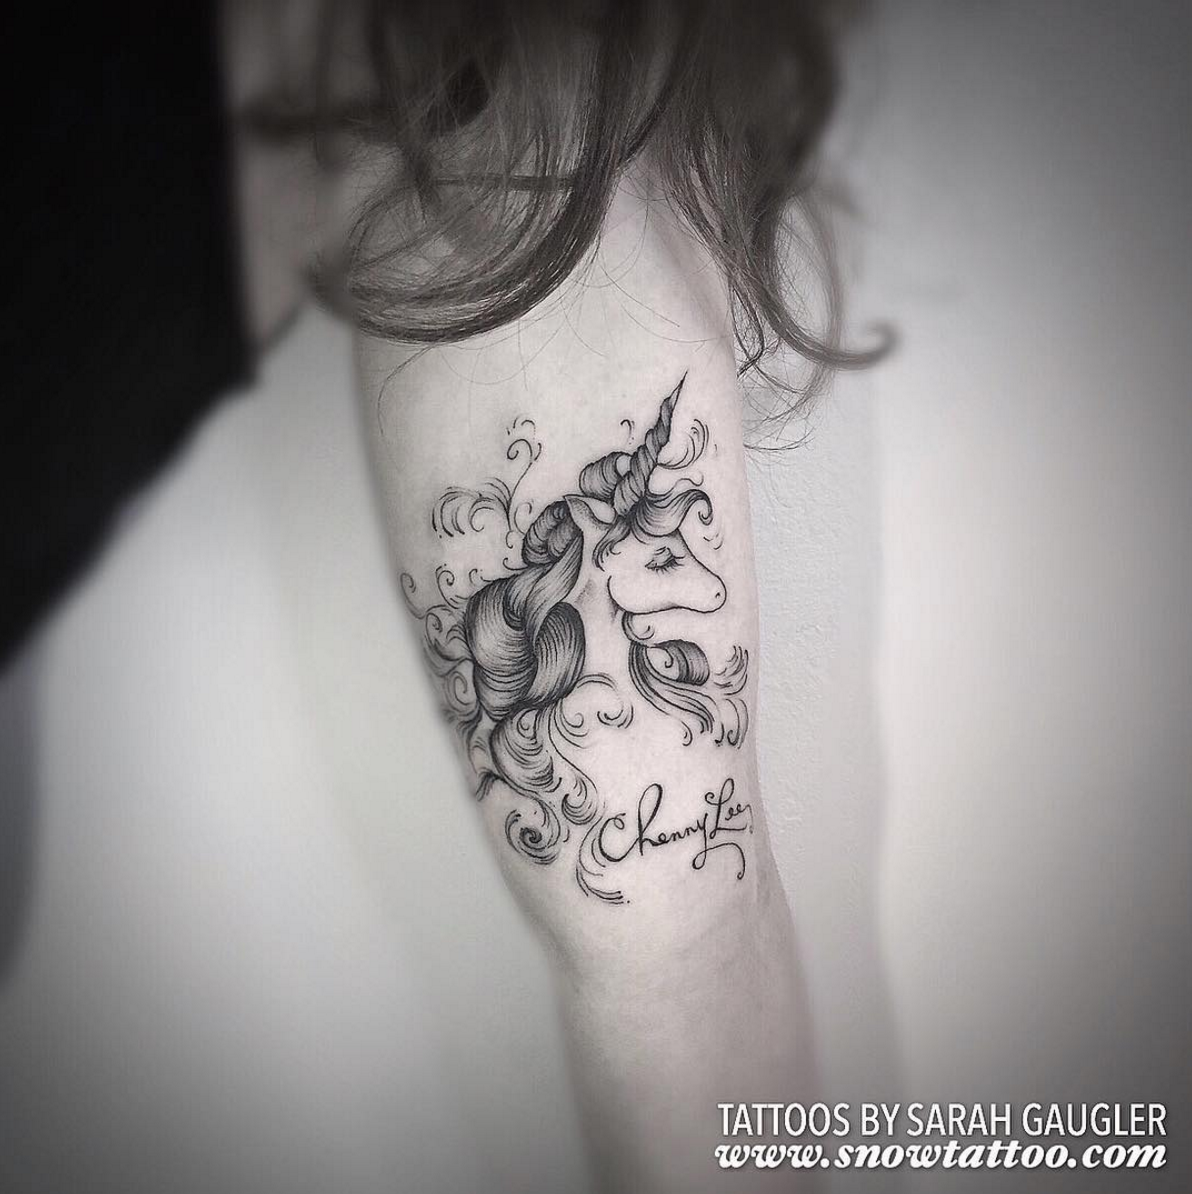 Sarah Gaugler Snow Tattoo Custom Unicorn Tattoos DetailedTattoo Intricate Tattoos Detailed Intricate Fine Line New York Best Tattoos Best Tattoo Artist NYC.png